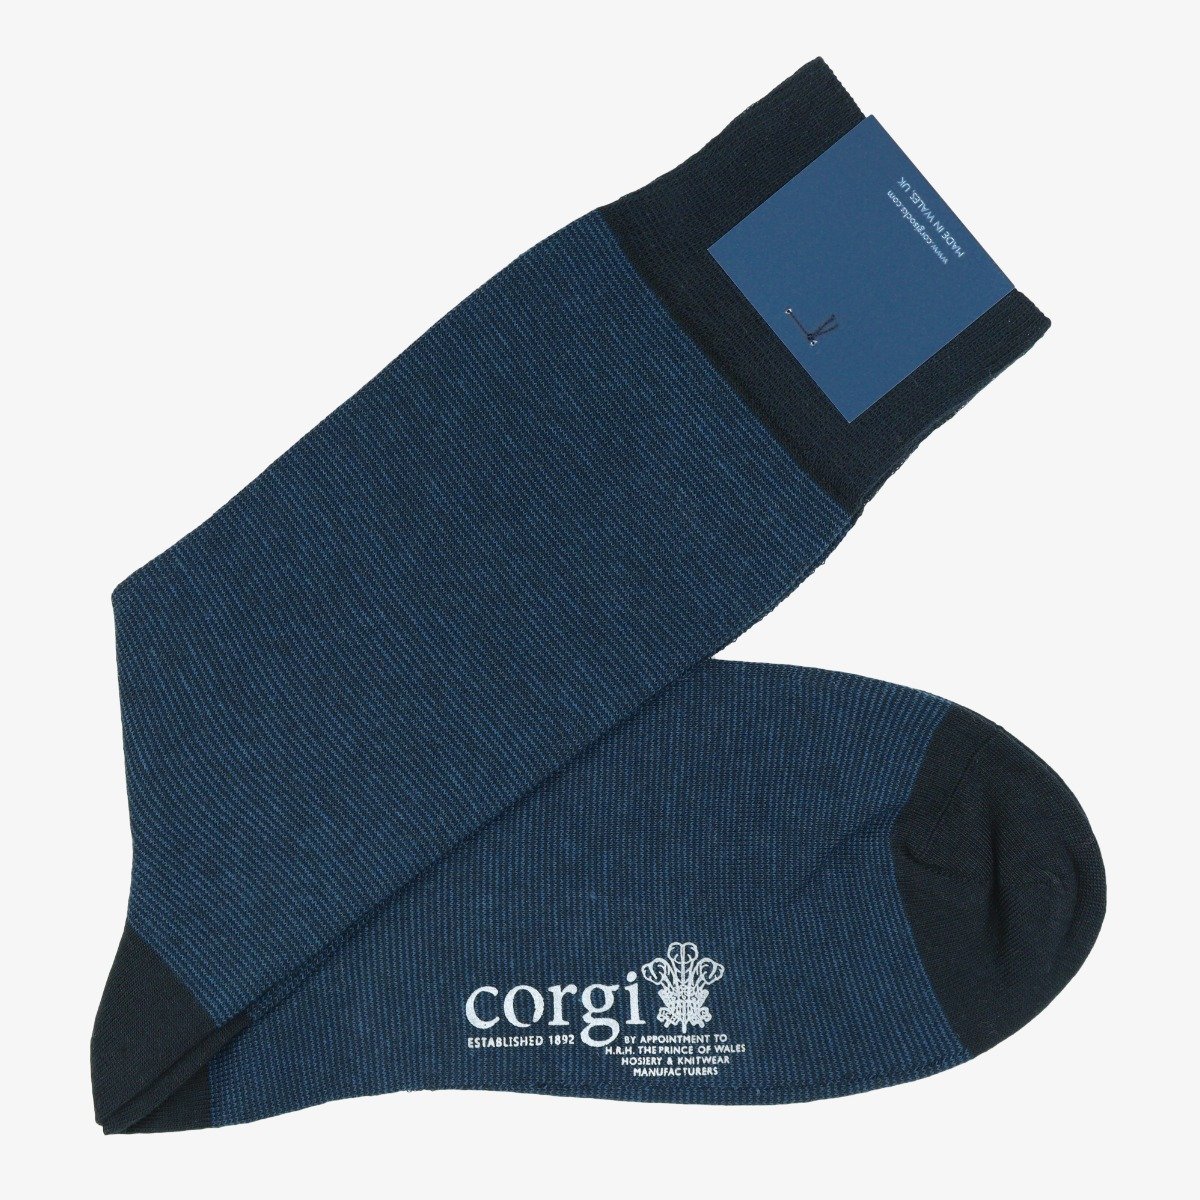 Corgi navy micro stripe cashmere men's socks